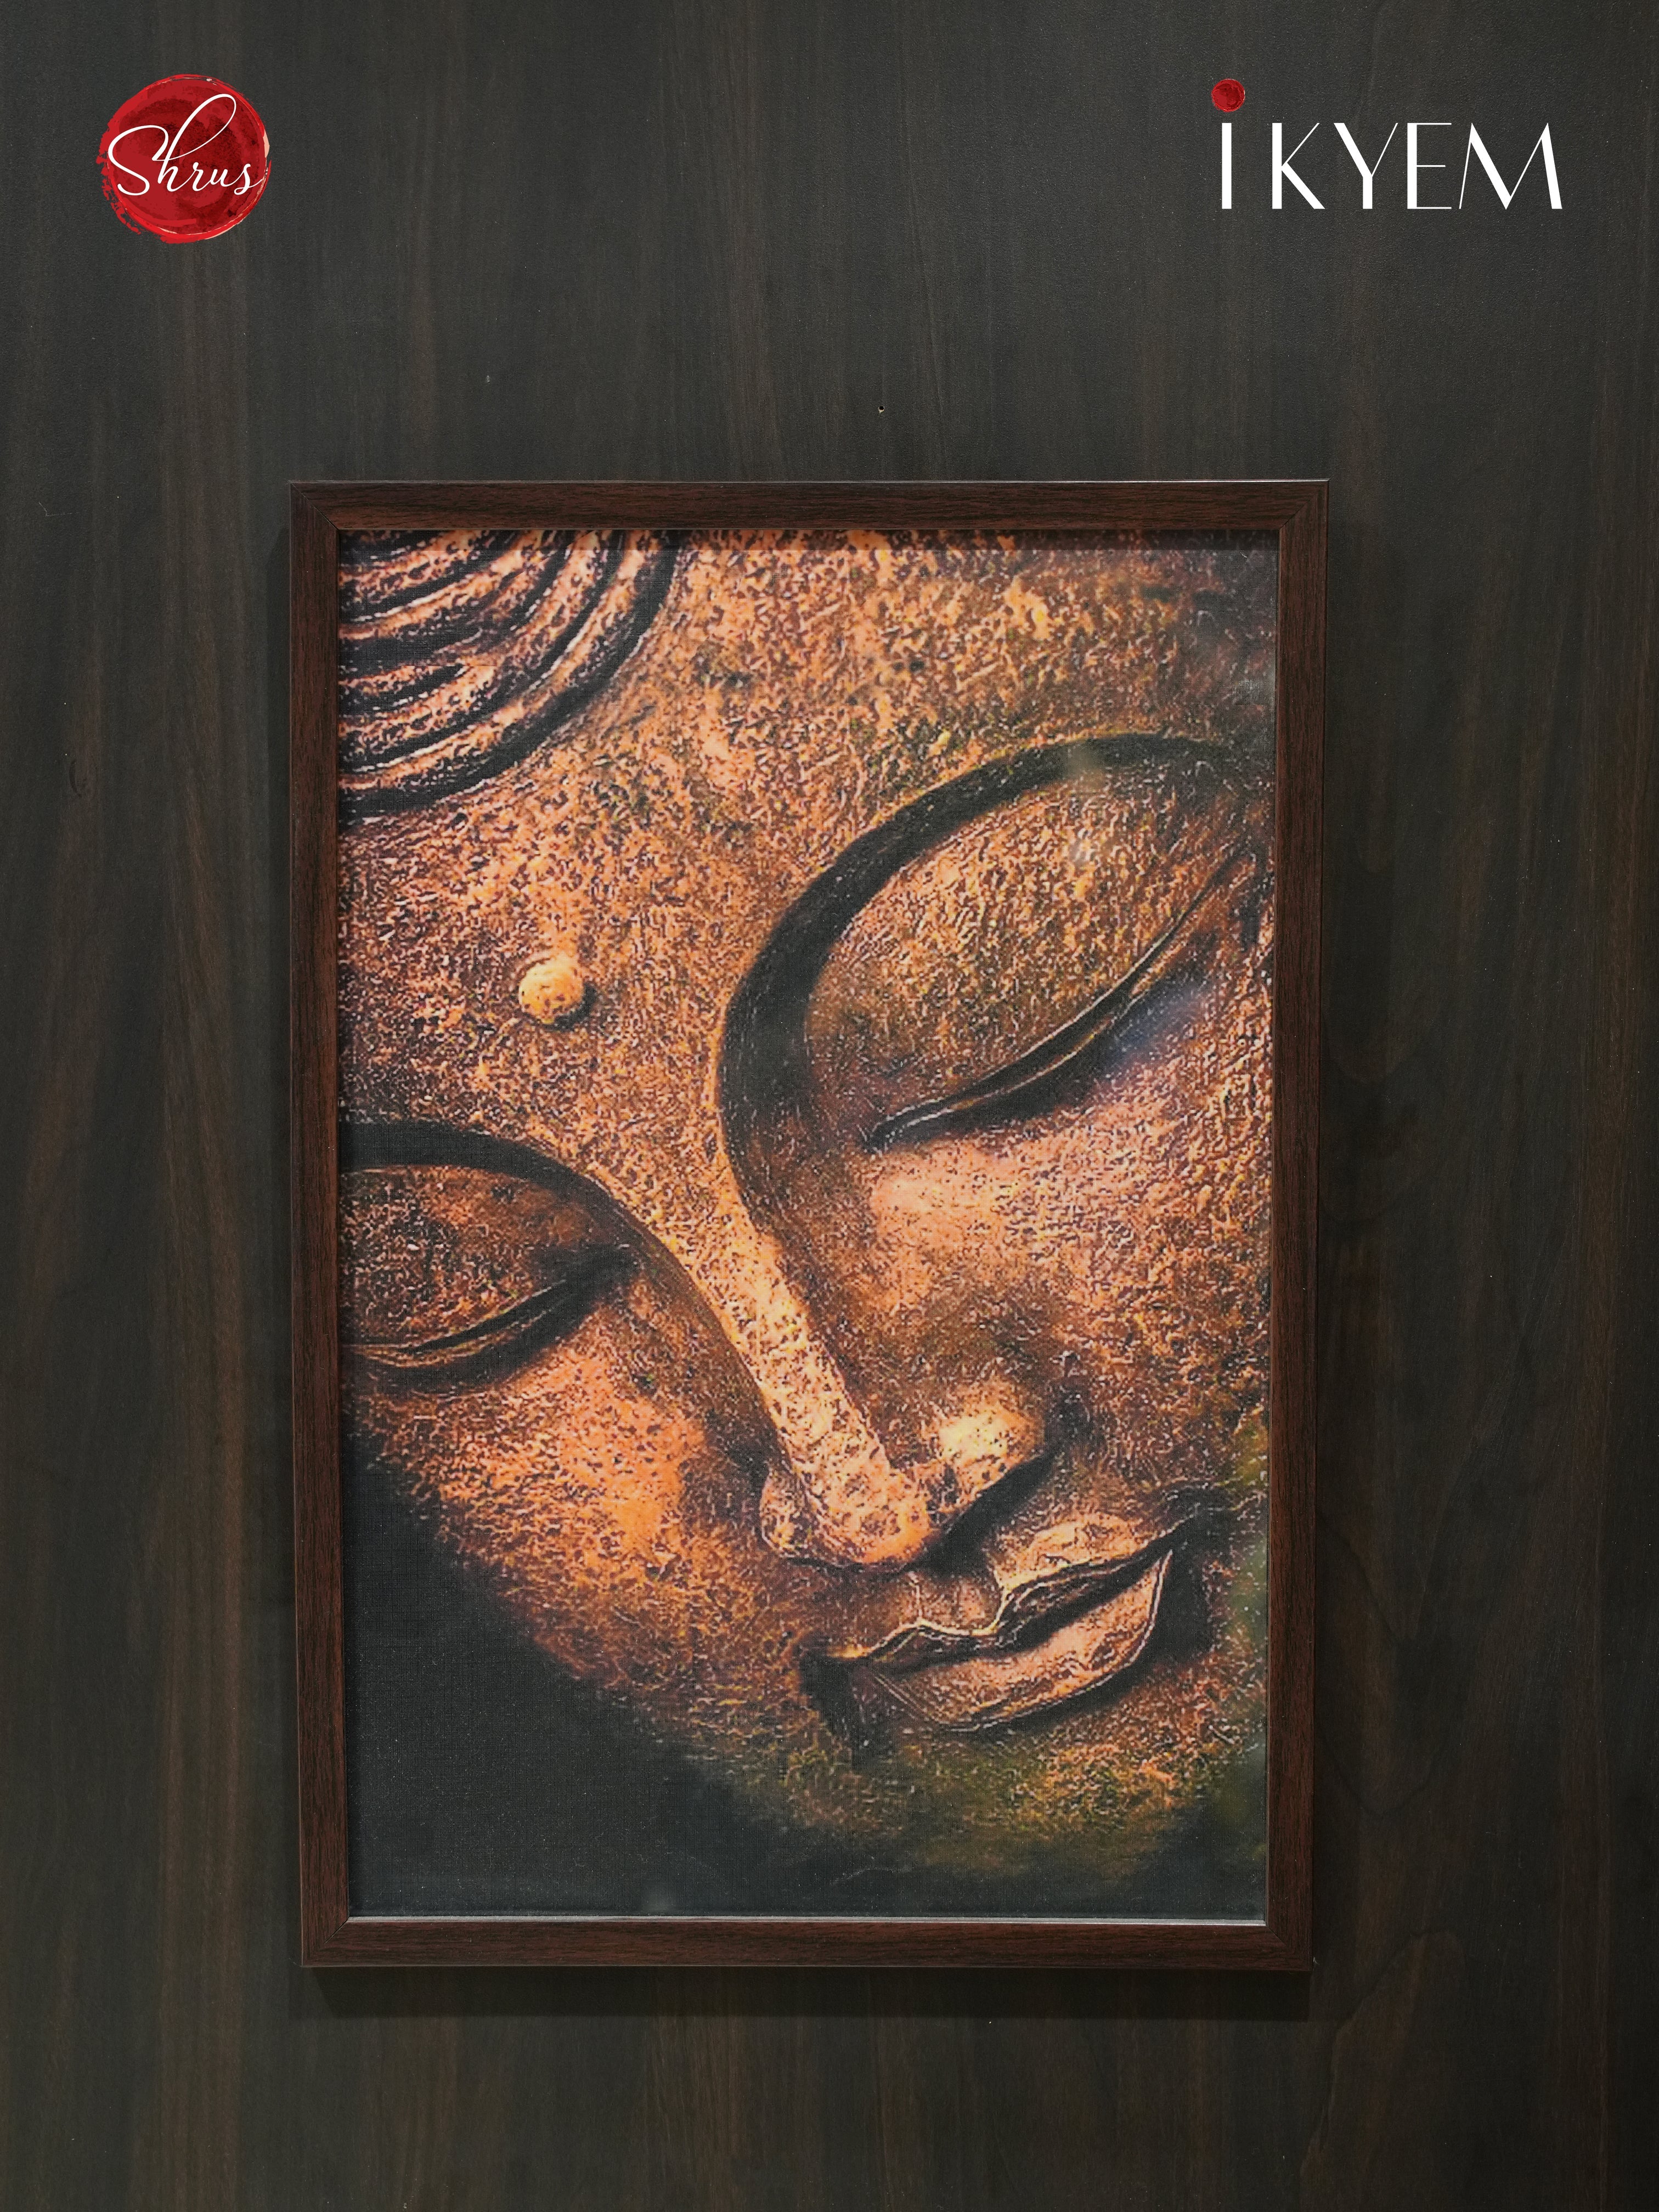 Peaceful Gautama Buddha - A Digital representation